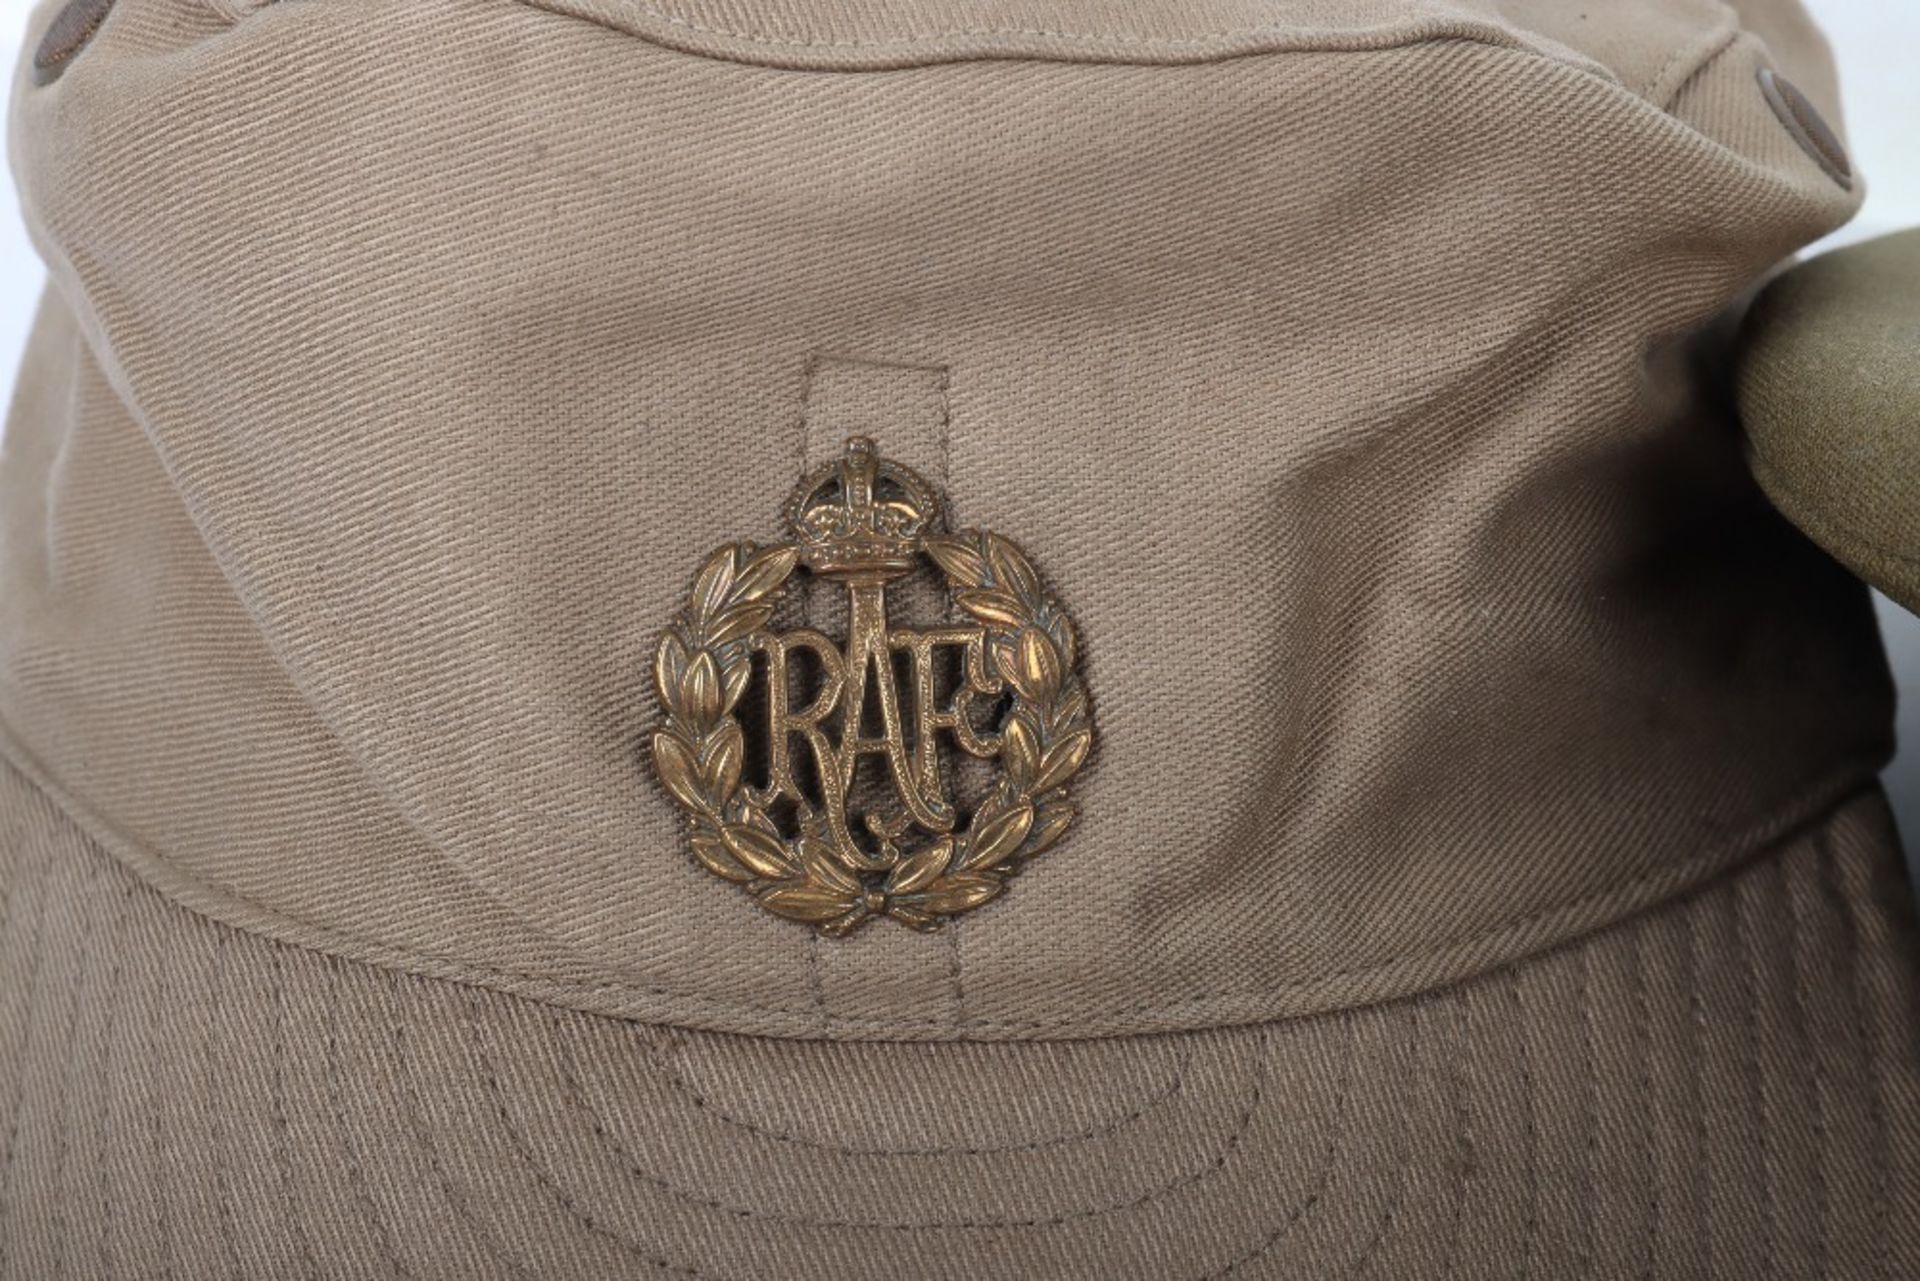 EIIR Royal Air Force Officers Service Dress Peaked Cap - Image 2 of 6